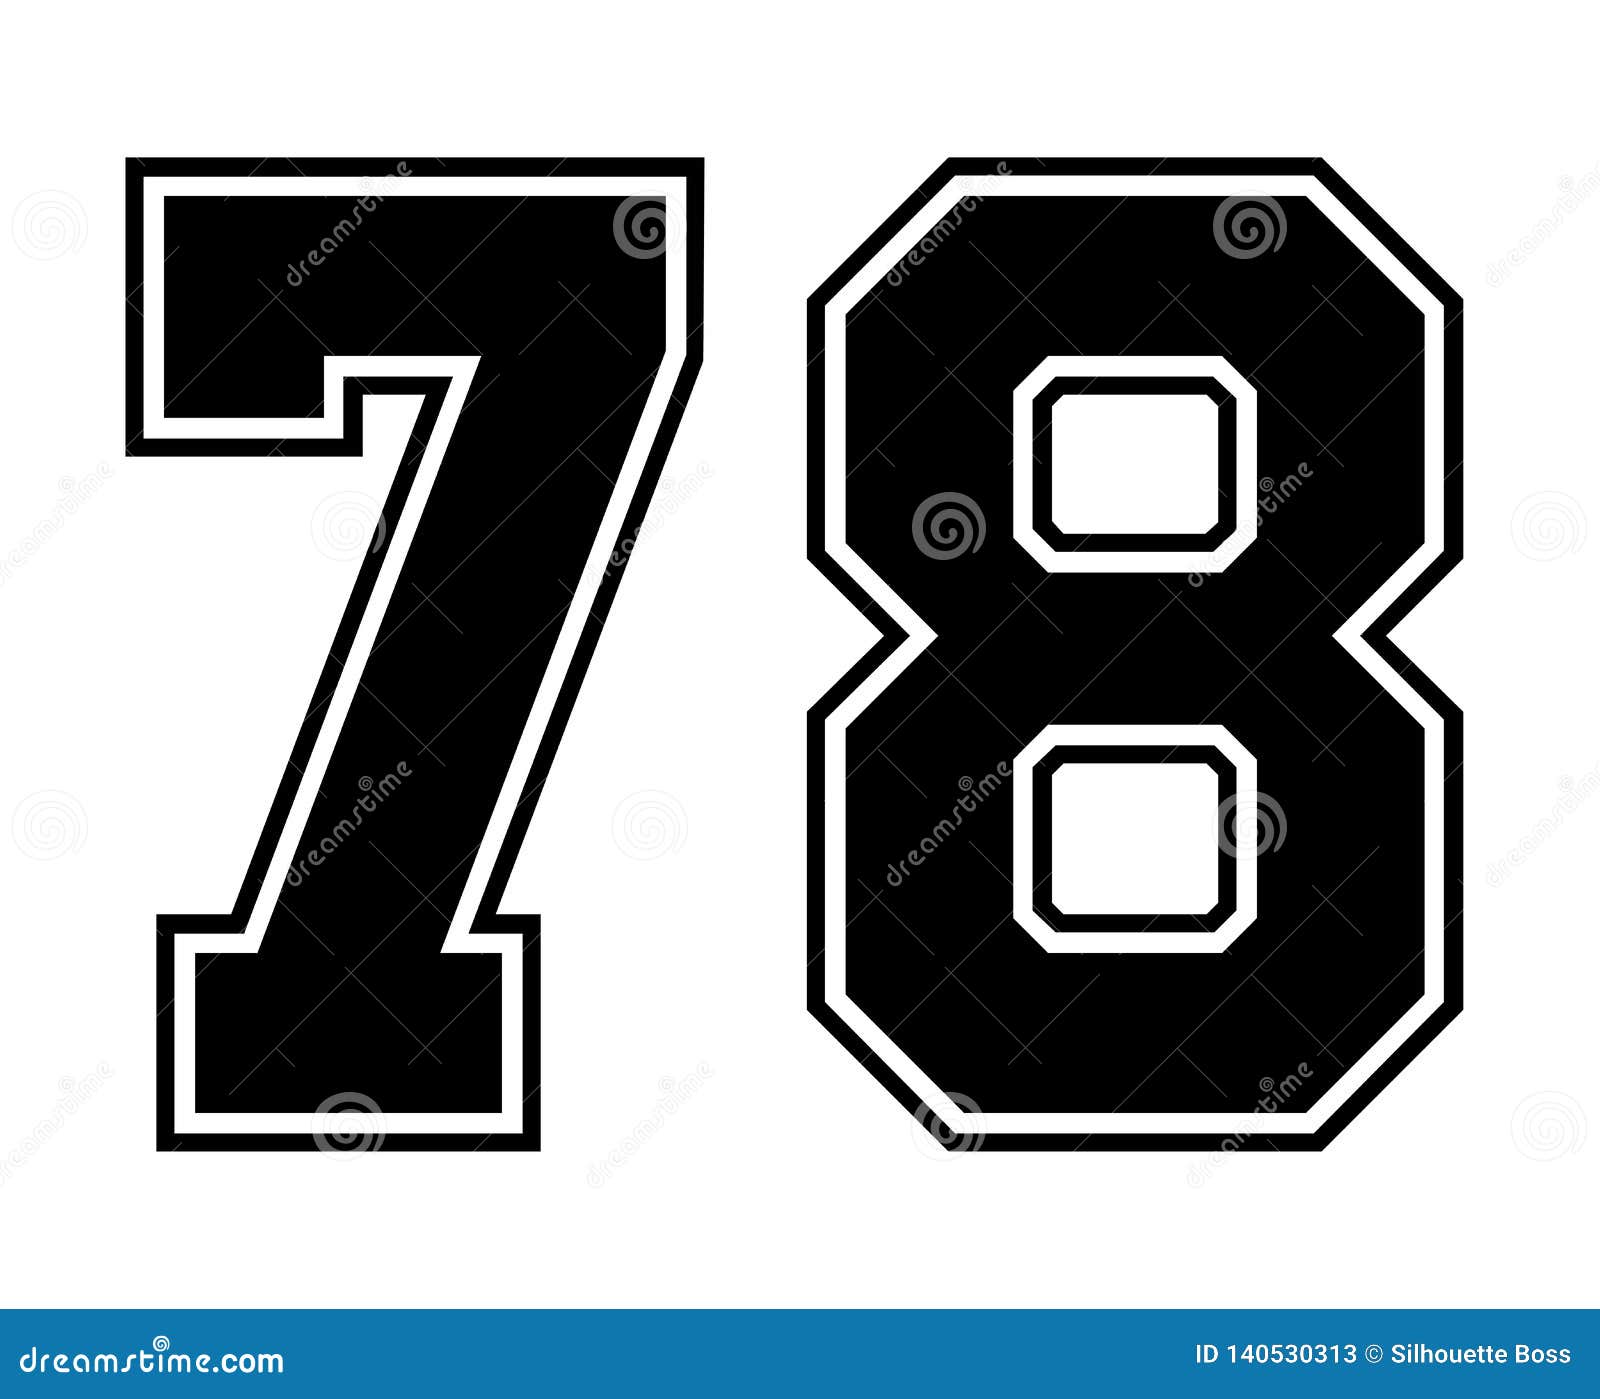 78 Classic Vintage Sport Jersey Number 